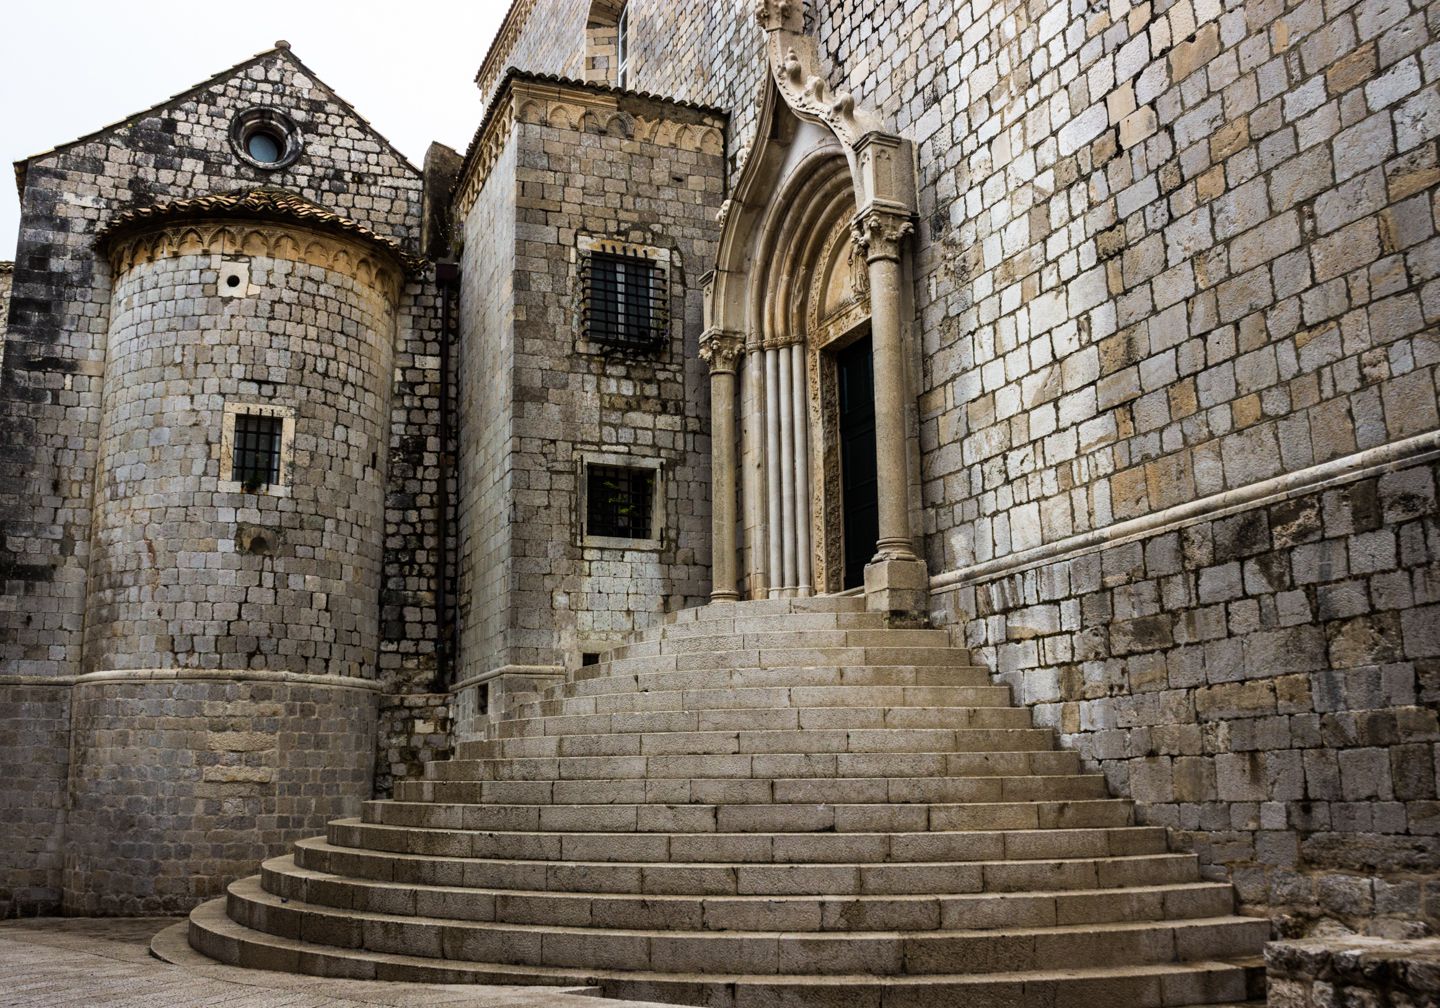 Dominican Monastery, Dubrovnik, Croatia